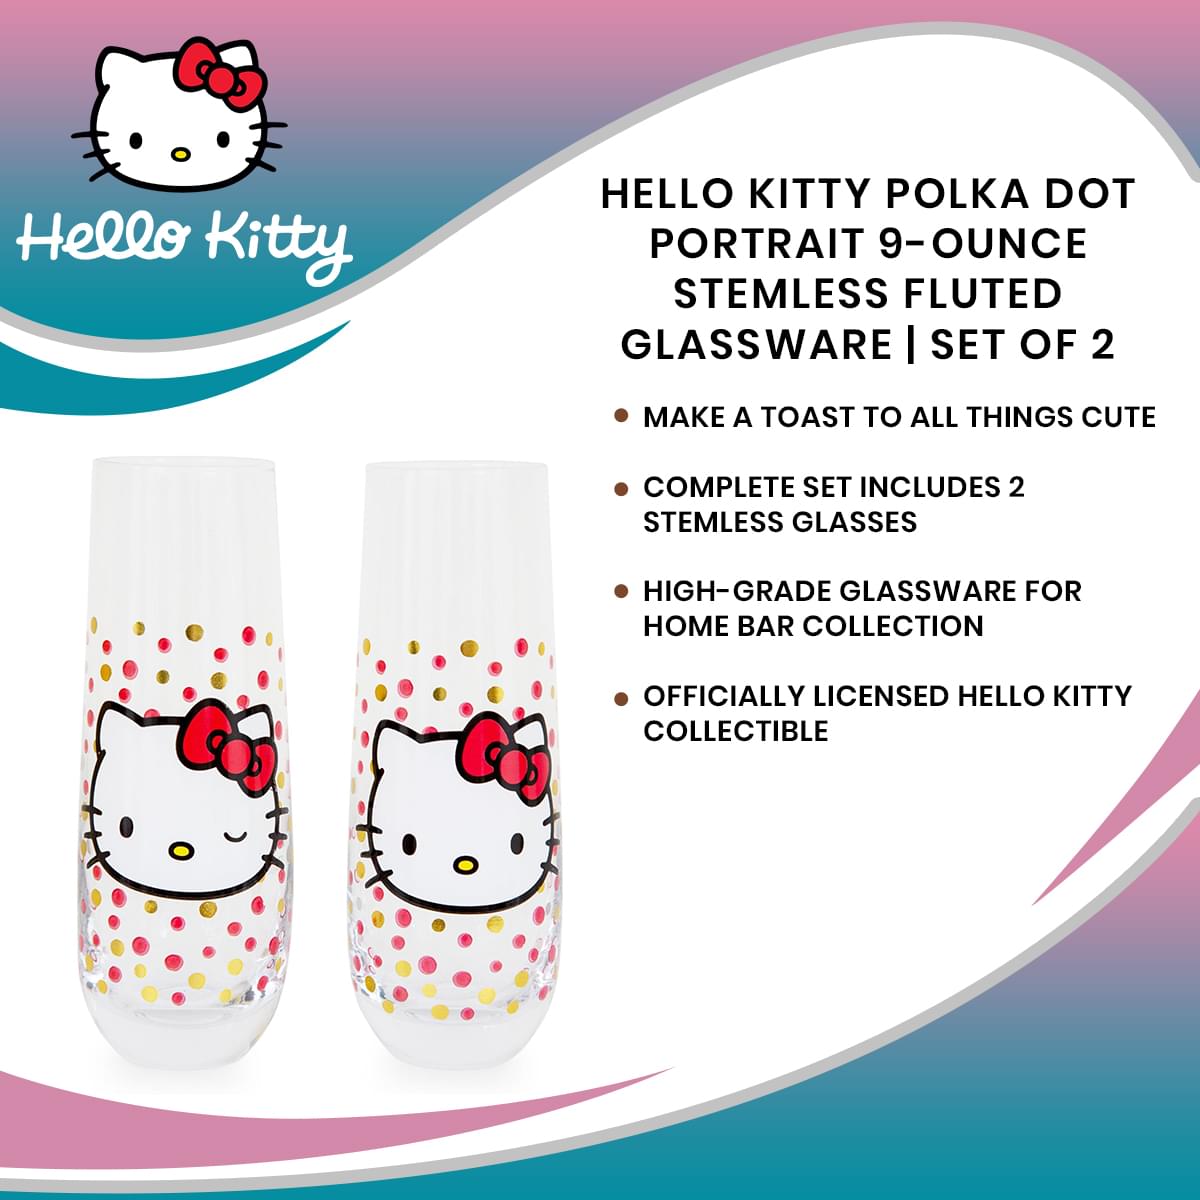 Hello Kitty Polka Dot Portrait 9-Ounce Stemless Fluted Glassware | Set of 2